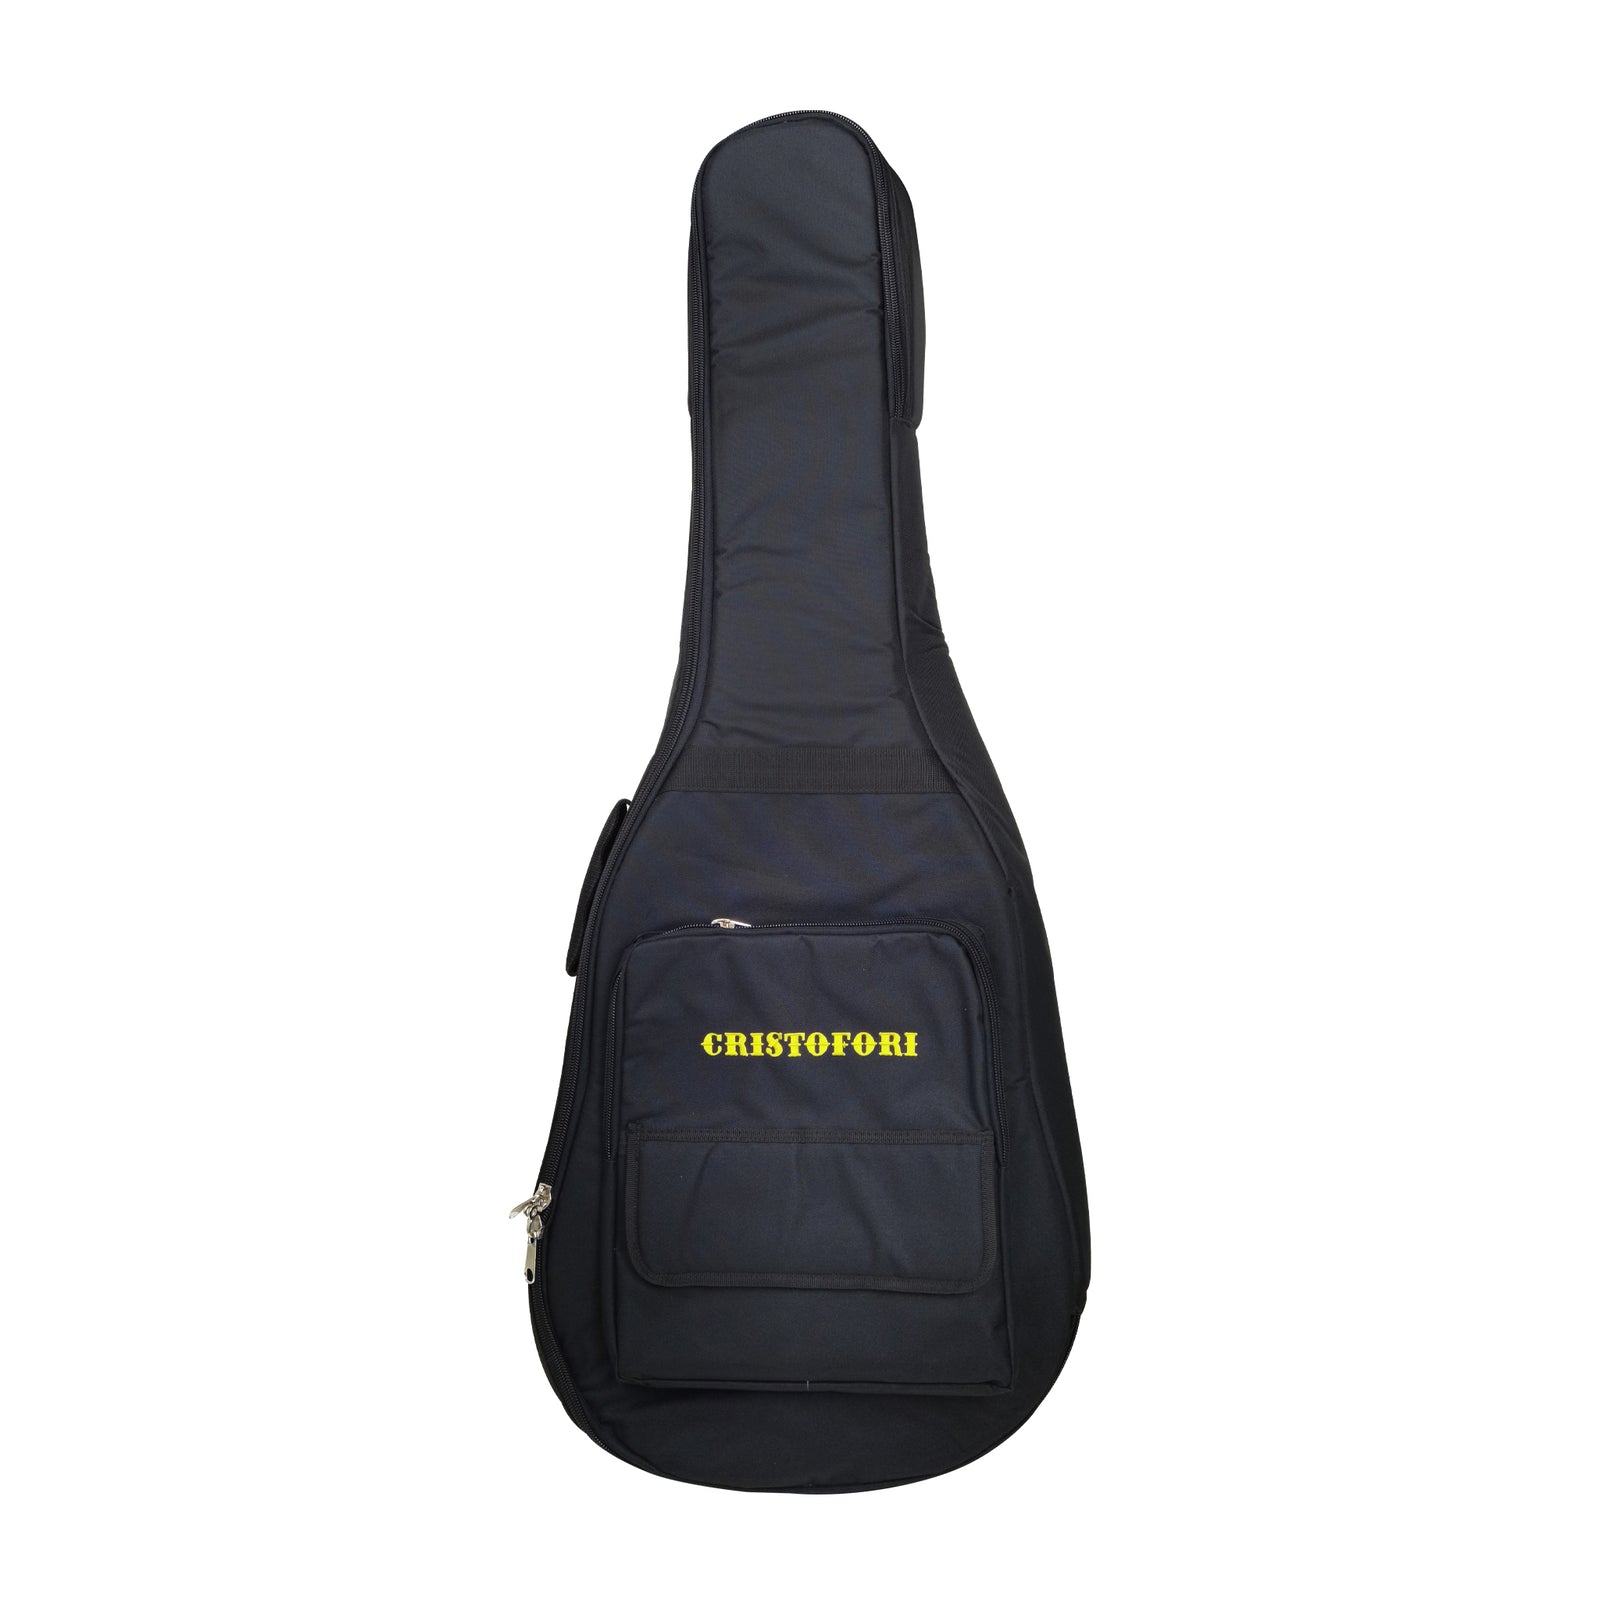 Cristofori Acoustic Guitar Bag 600D- 42"